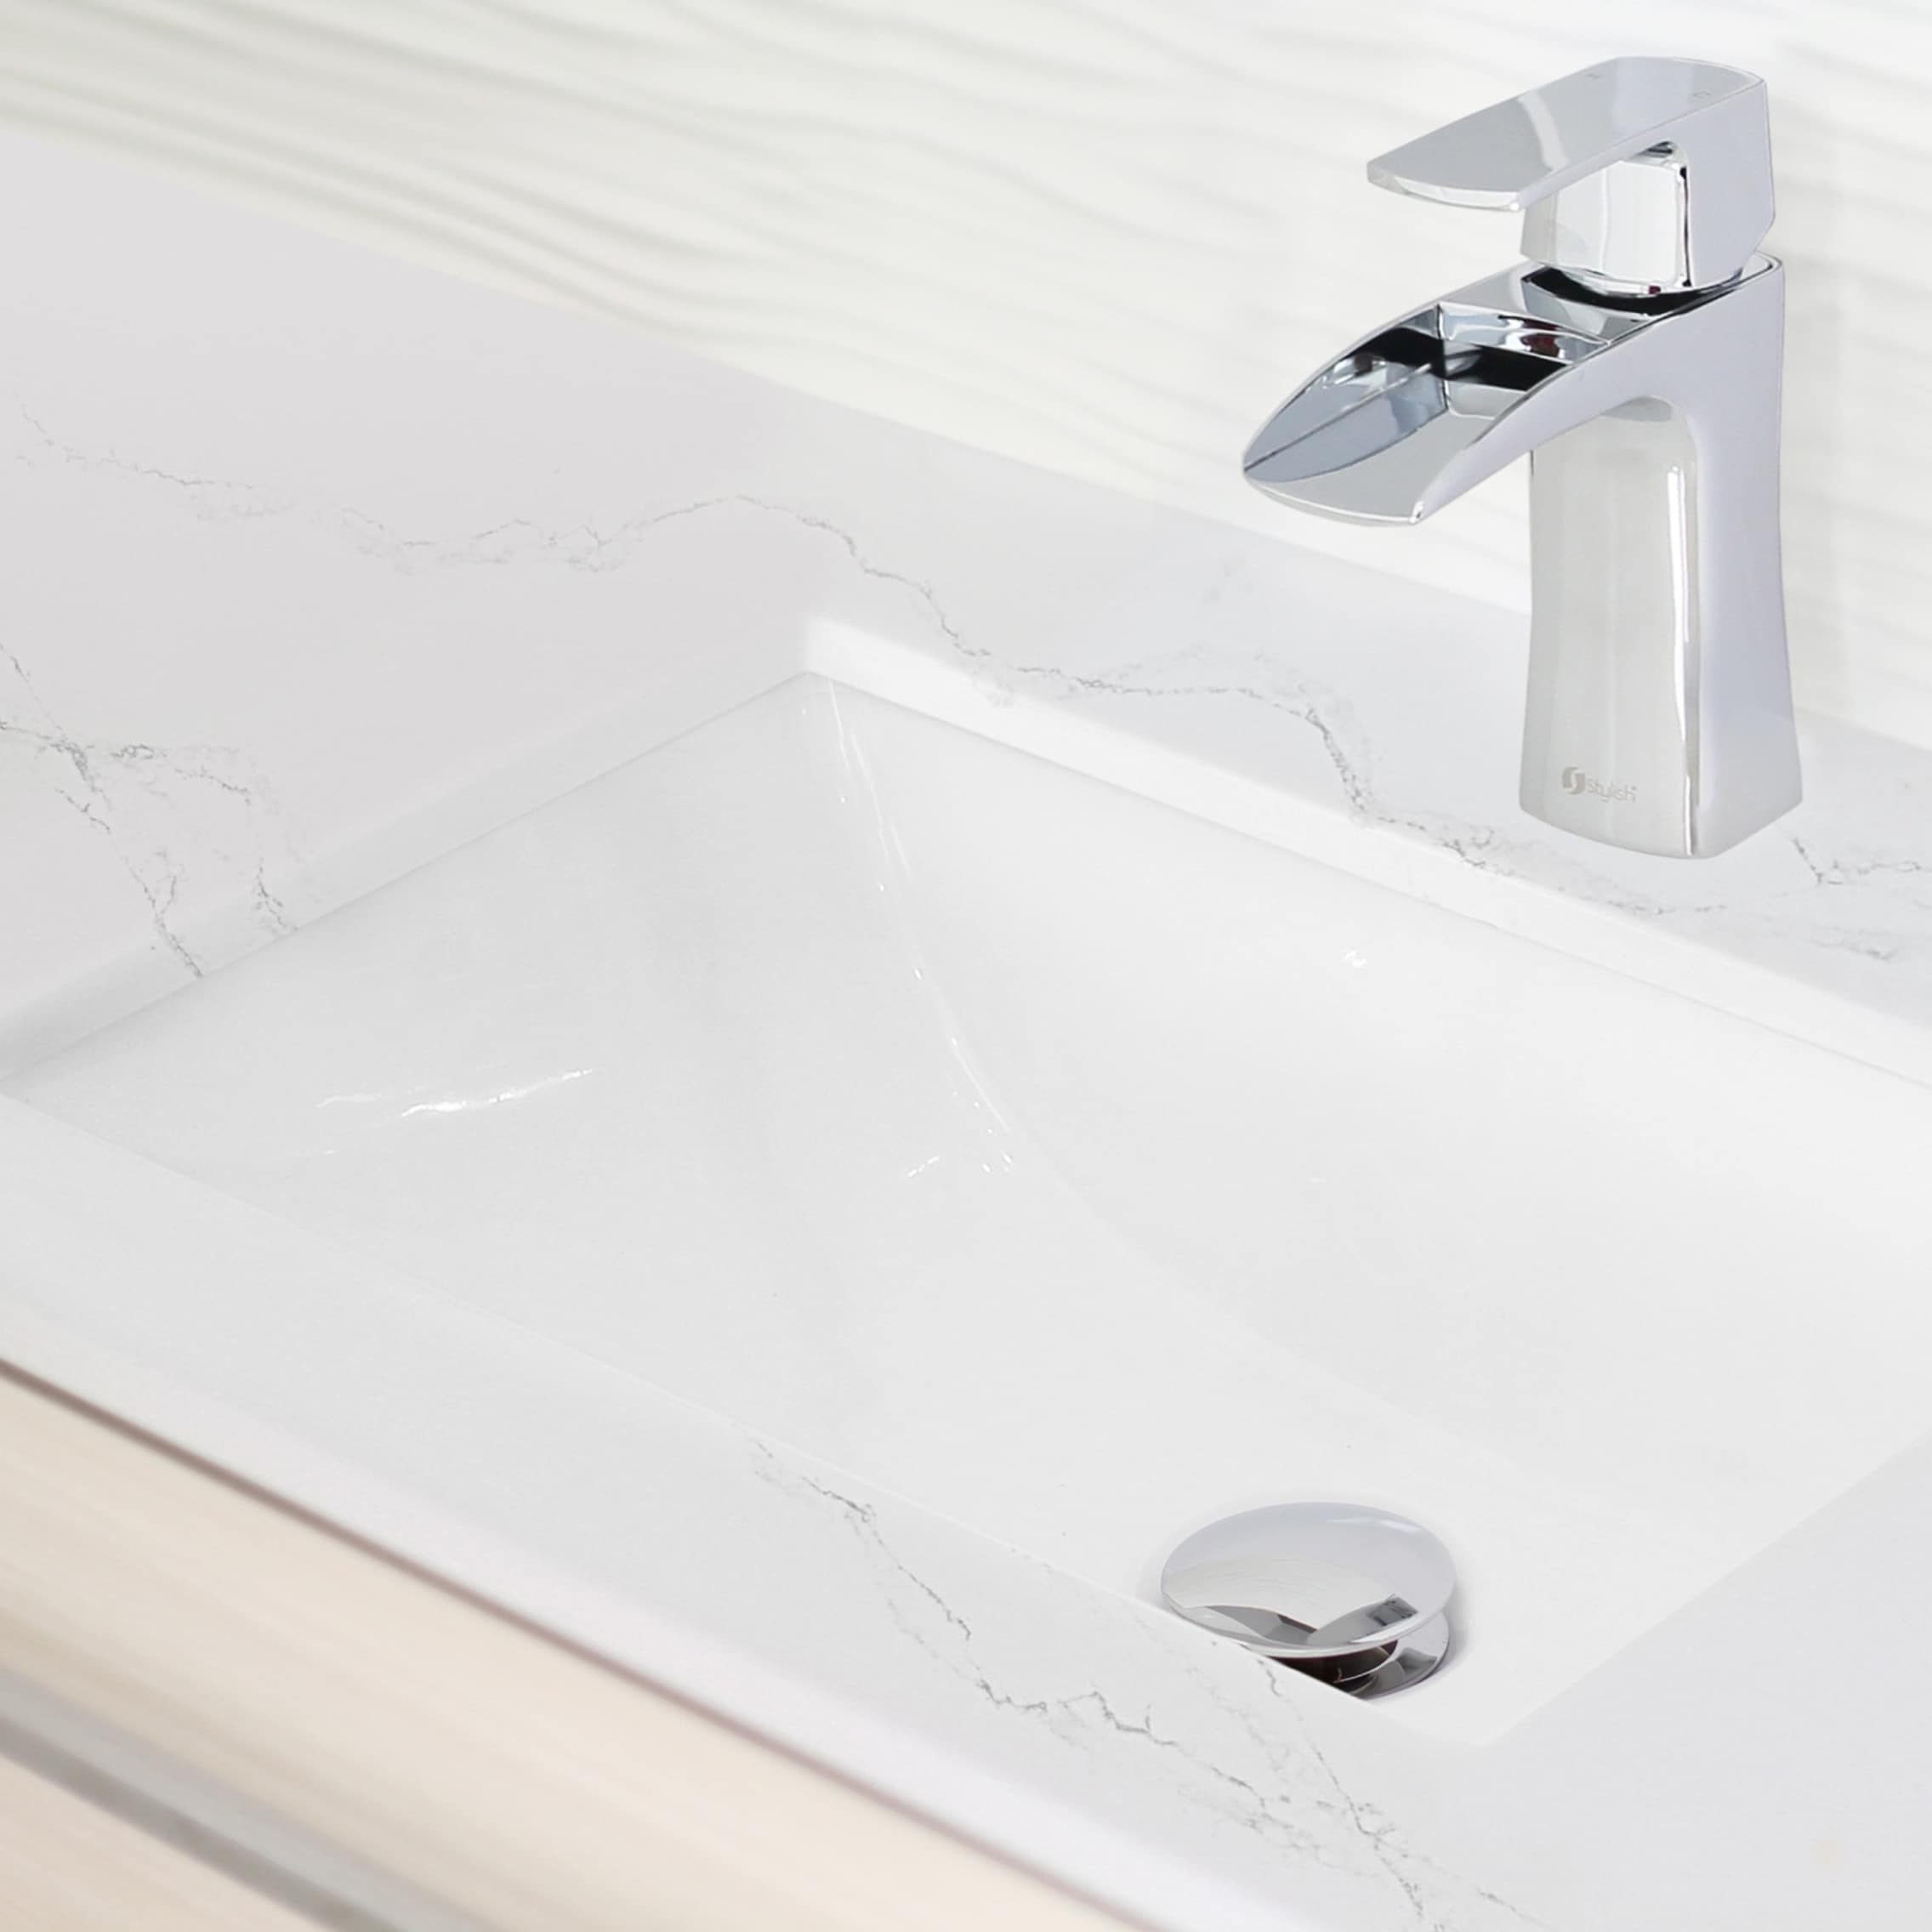 White P-203A STYLISH® 21 Ceramic Porcelain Rectangular Undermount Bathroom Sink with Black Overflow